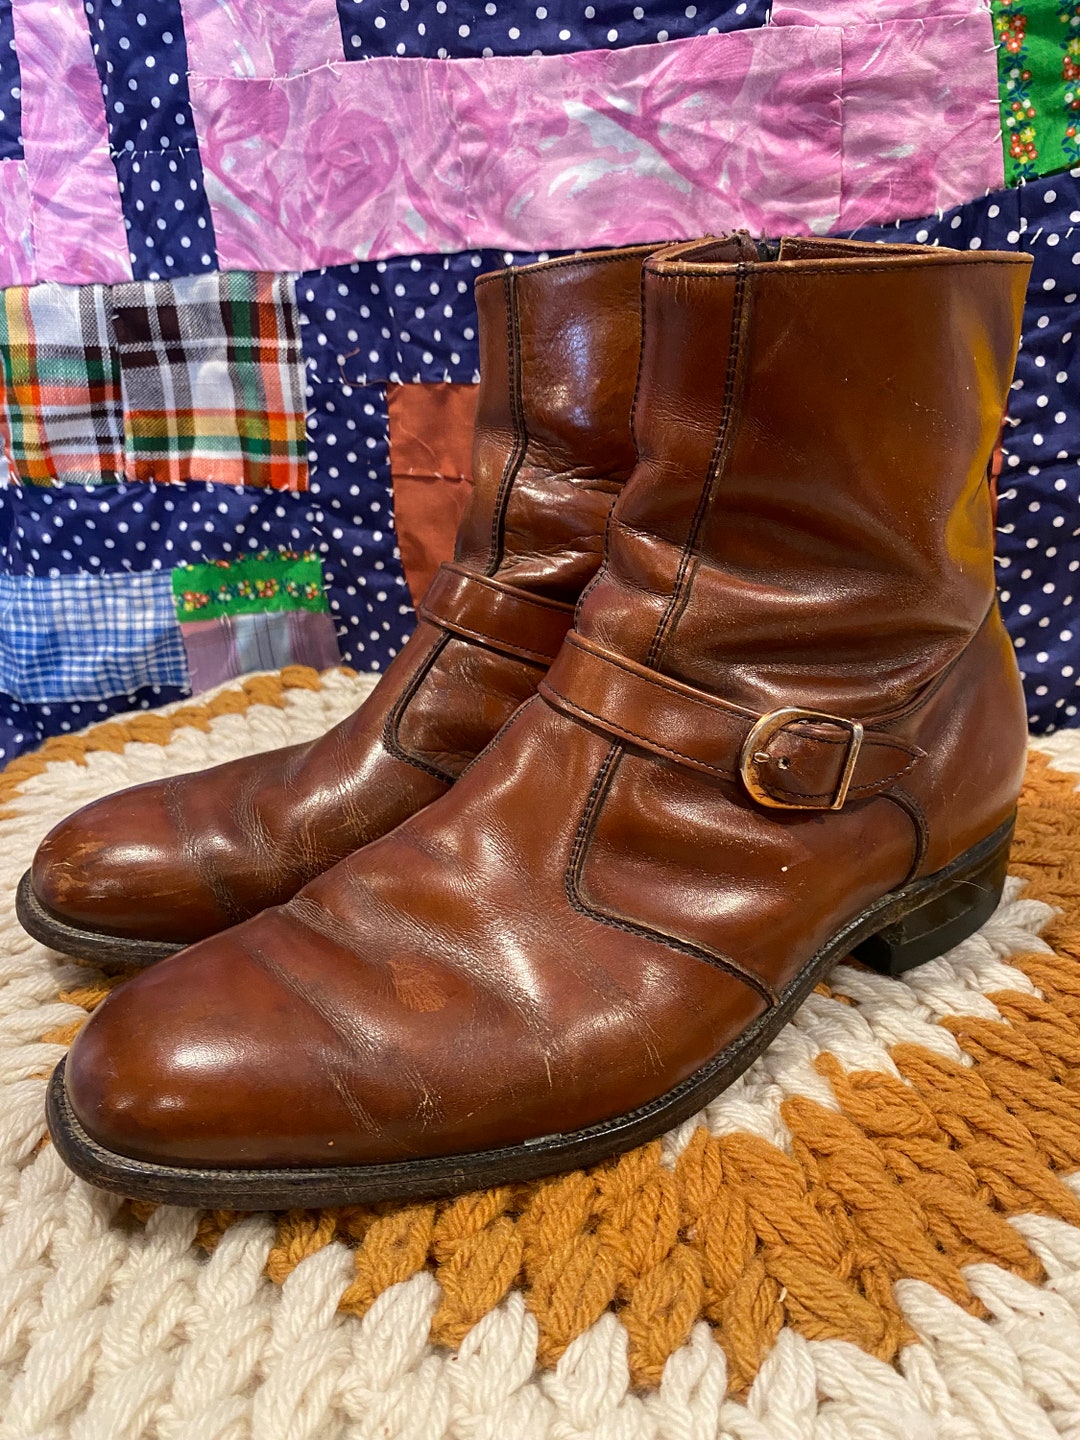 1970s Zipper Boots - Etsy